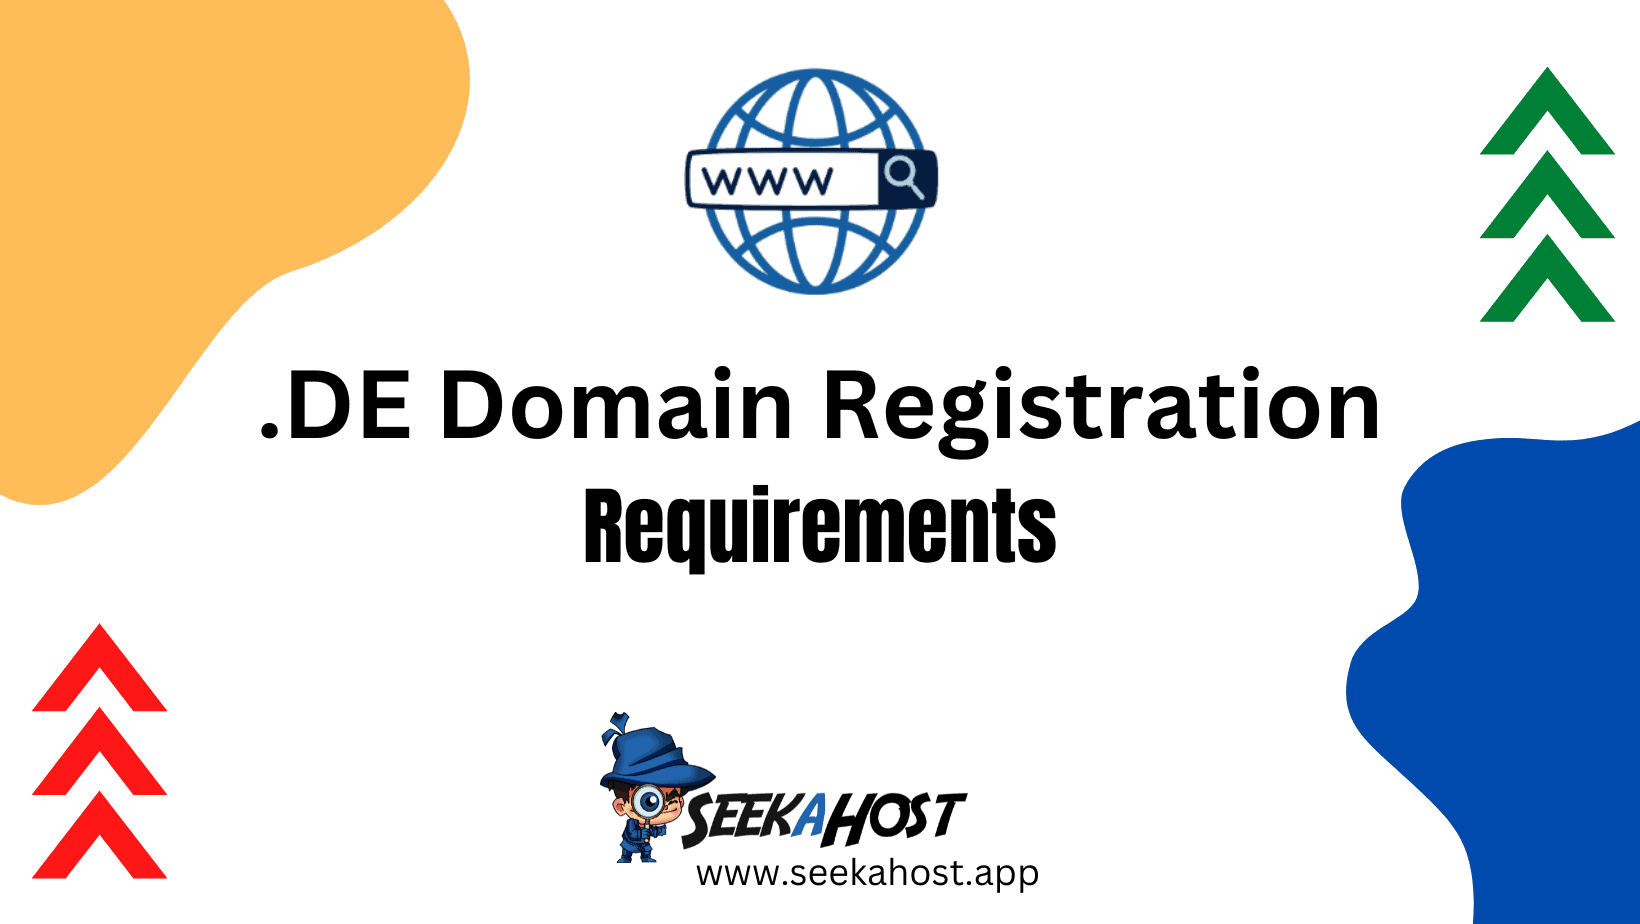 DE Domain Registration Requirements